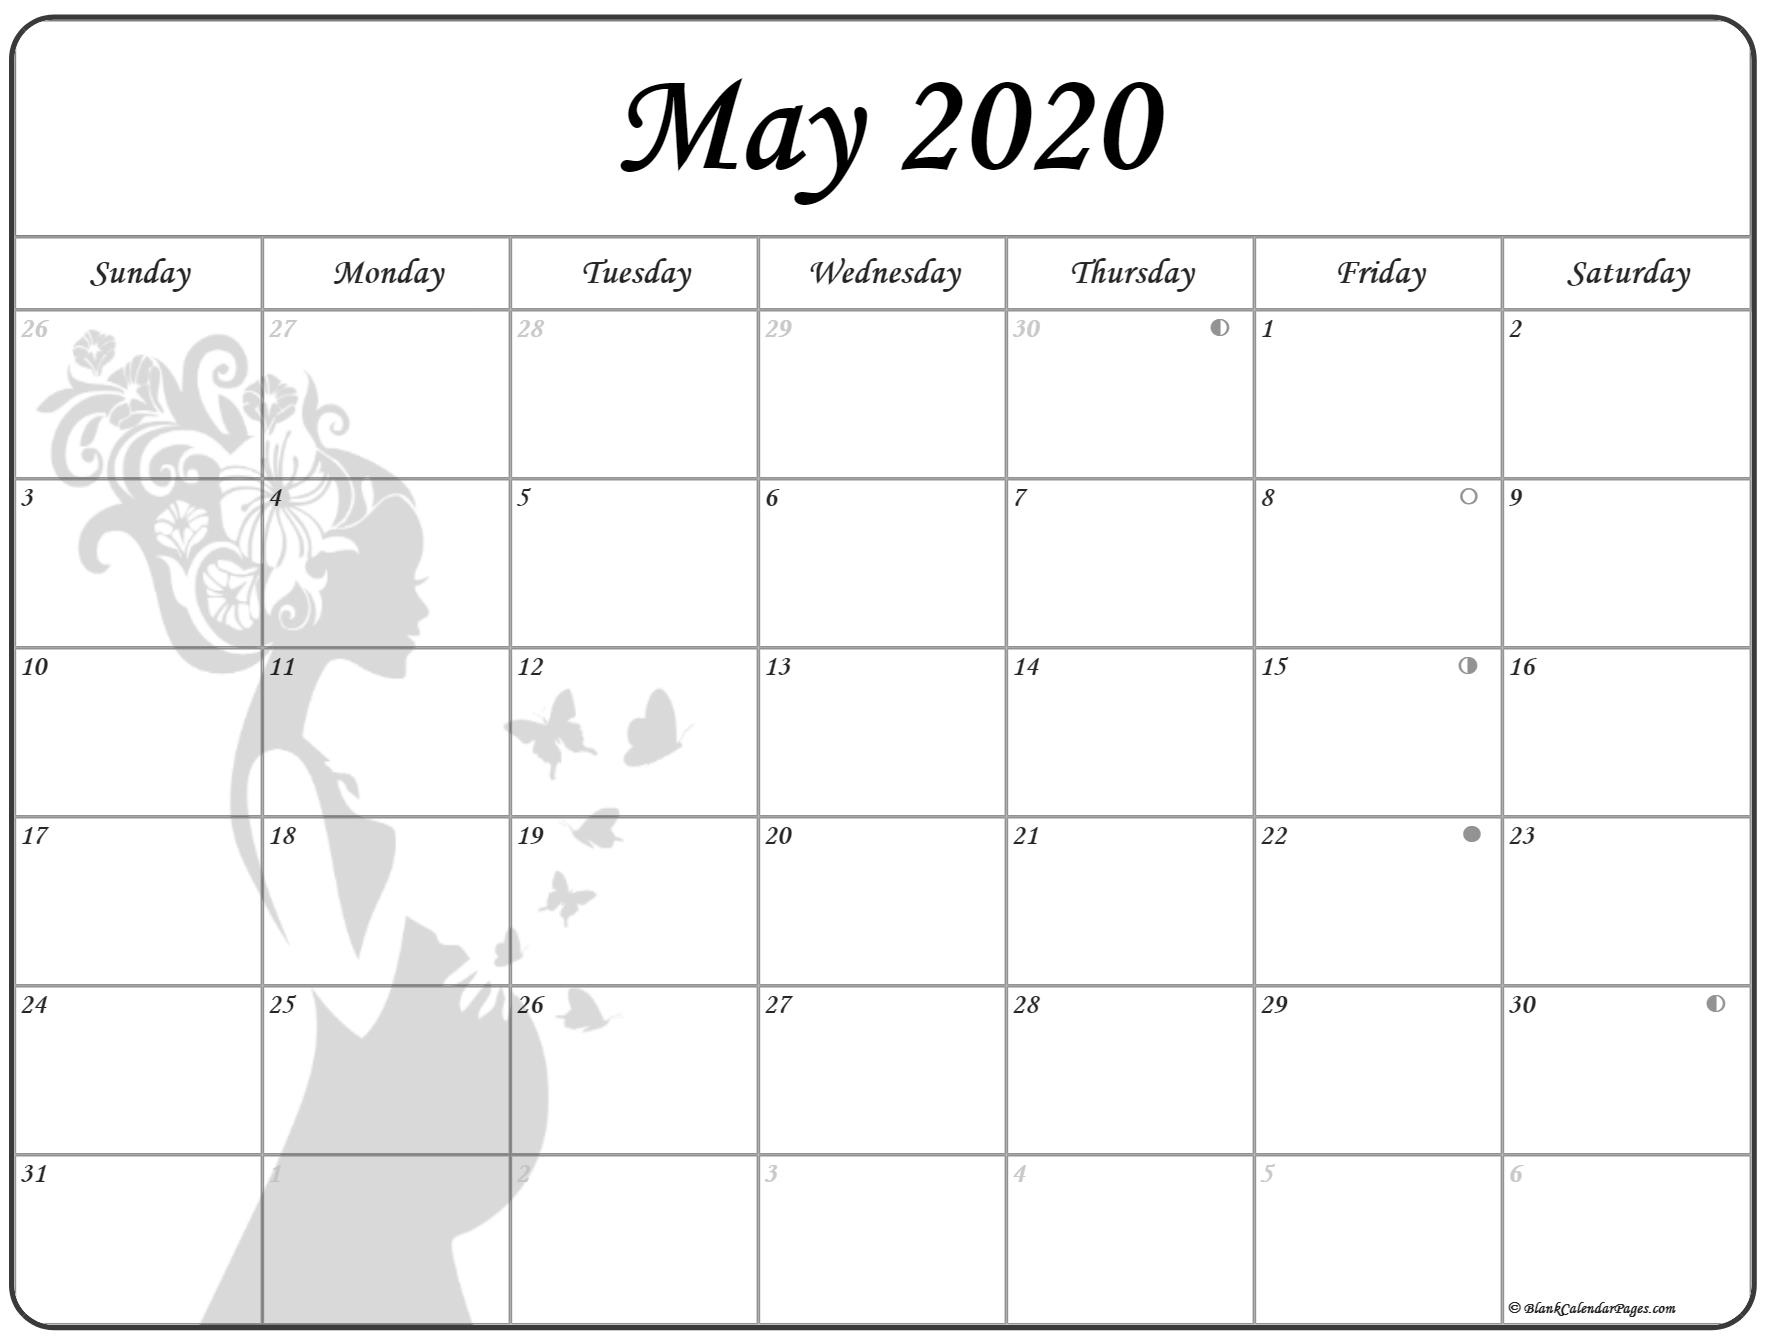 May 2020 Pregnancy Calendar | Fertility Calendar Remarkable 2020 Calendar With Moon Phases